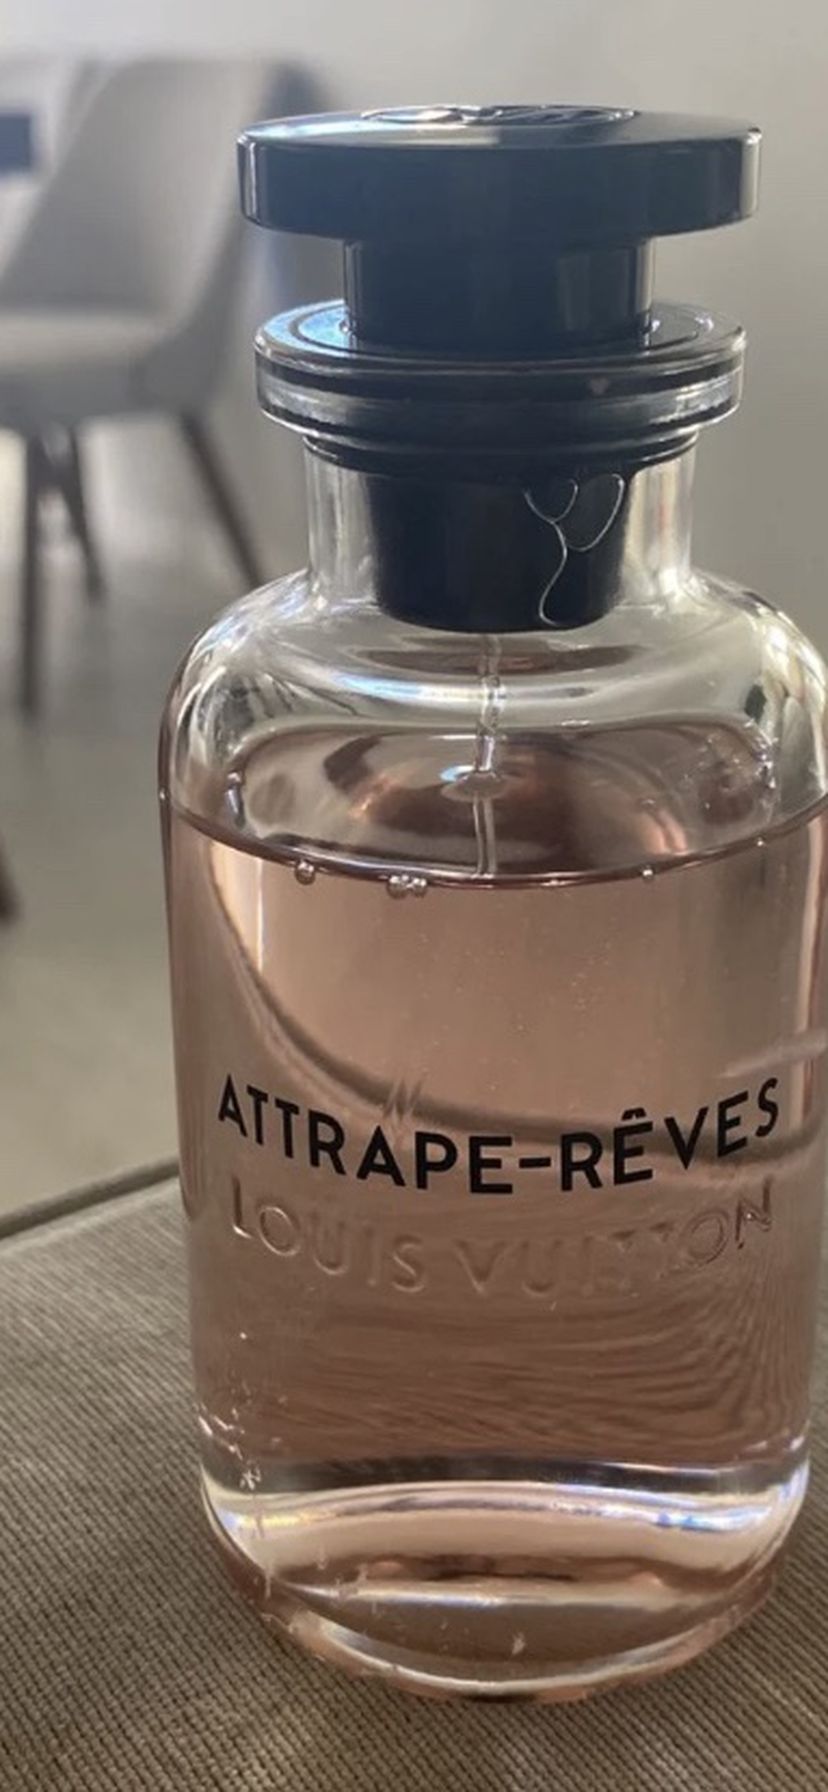 Attrape-reves Perfume By Louis vuitton